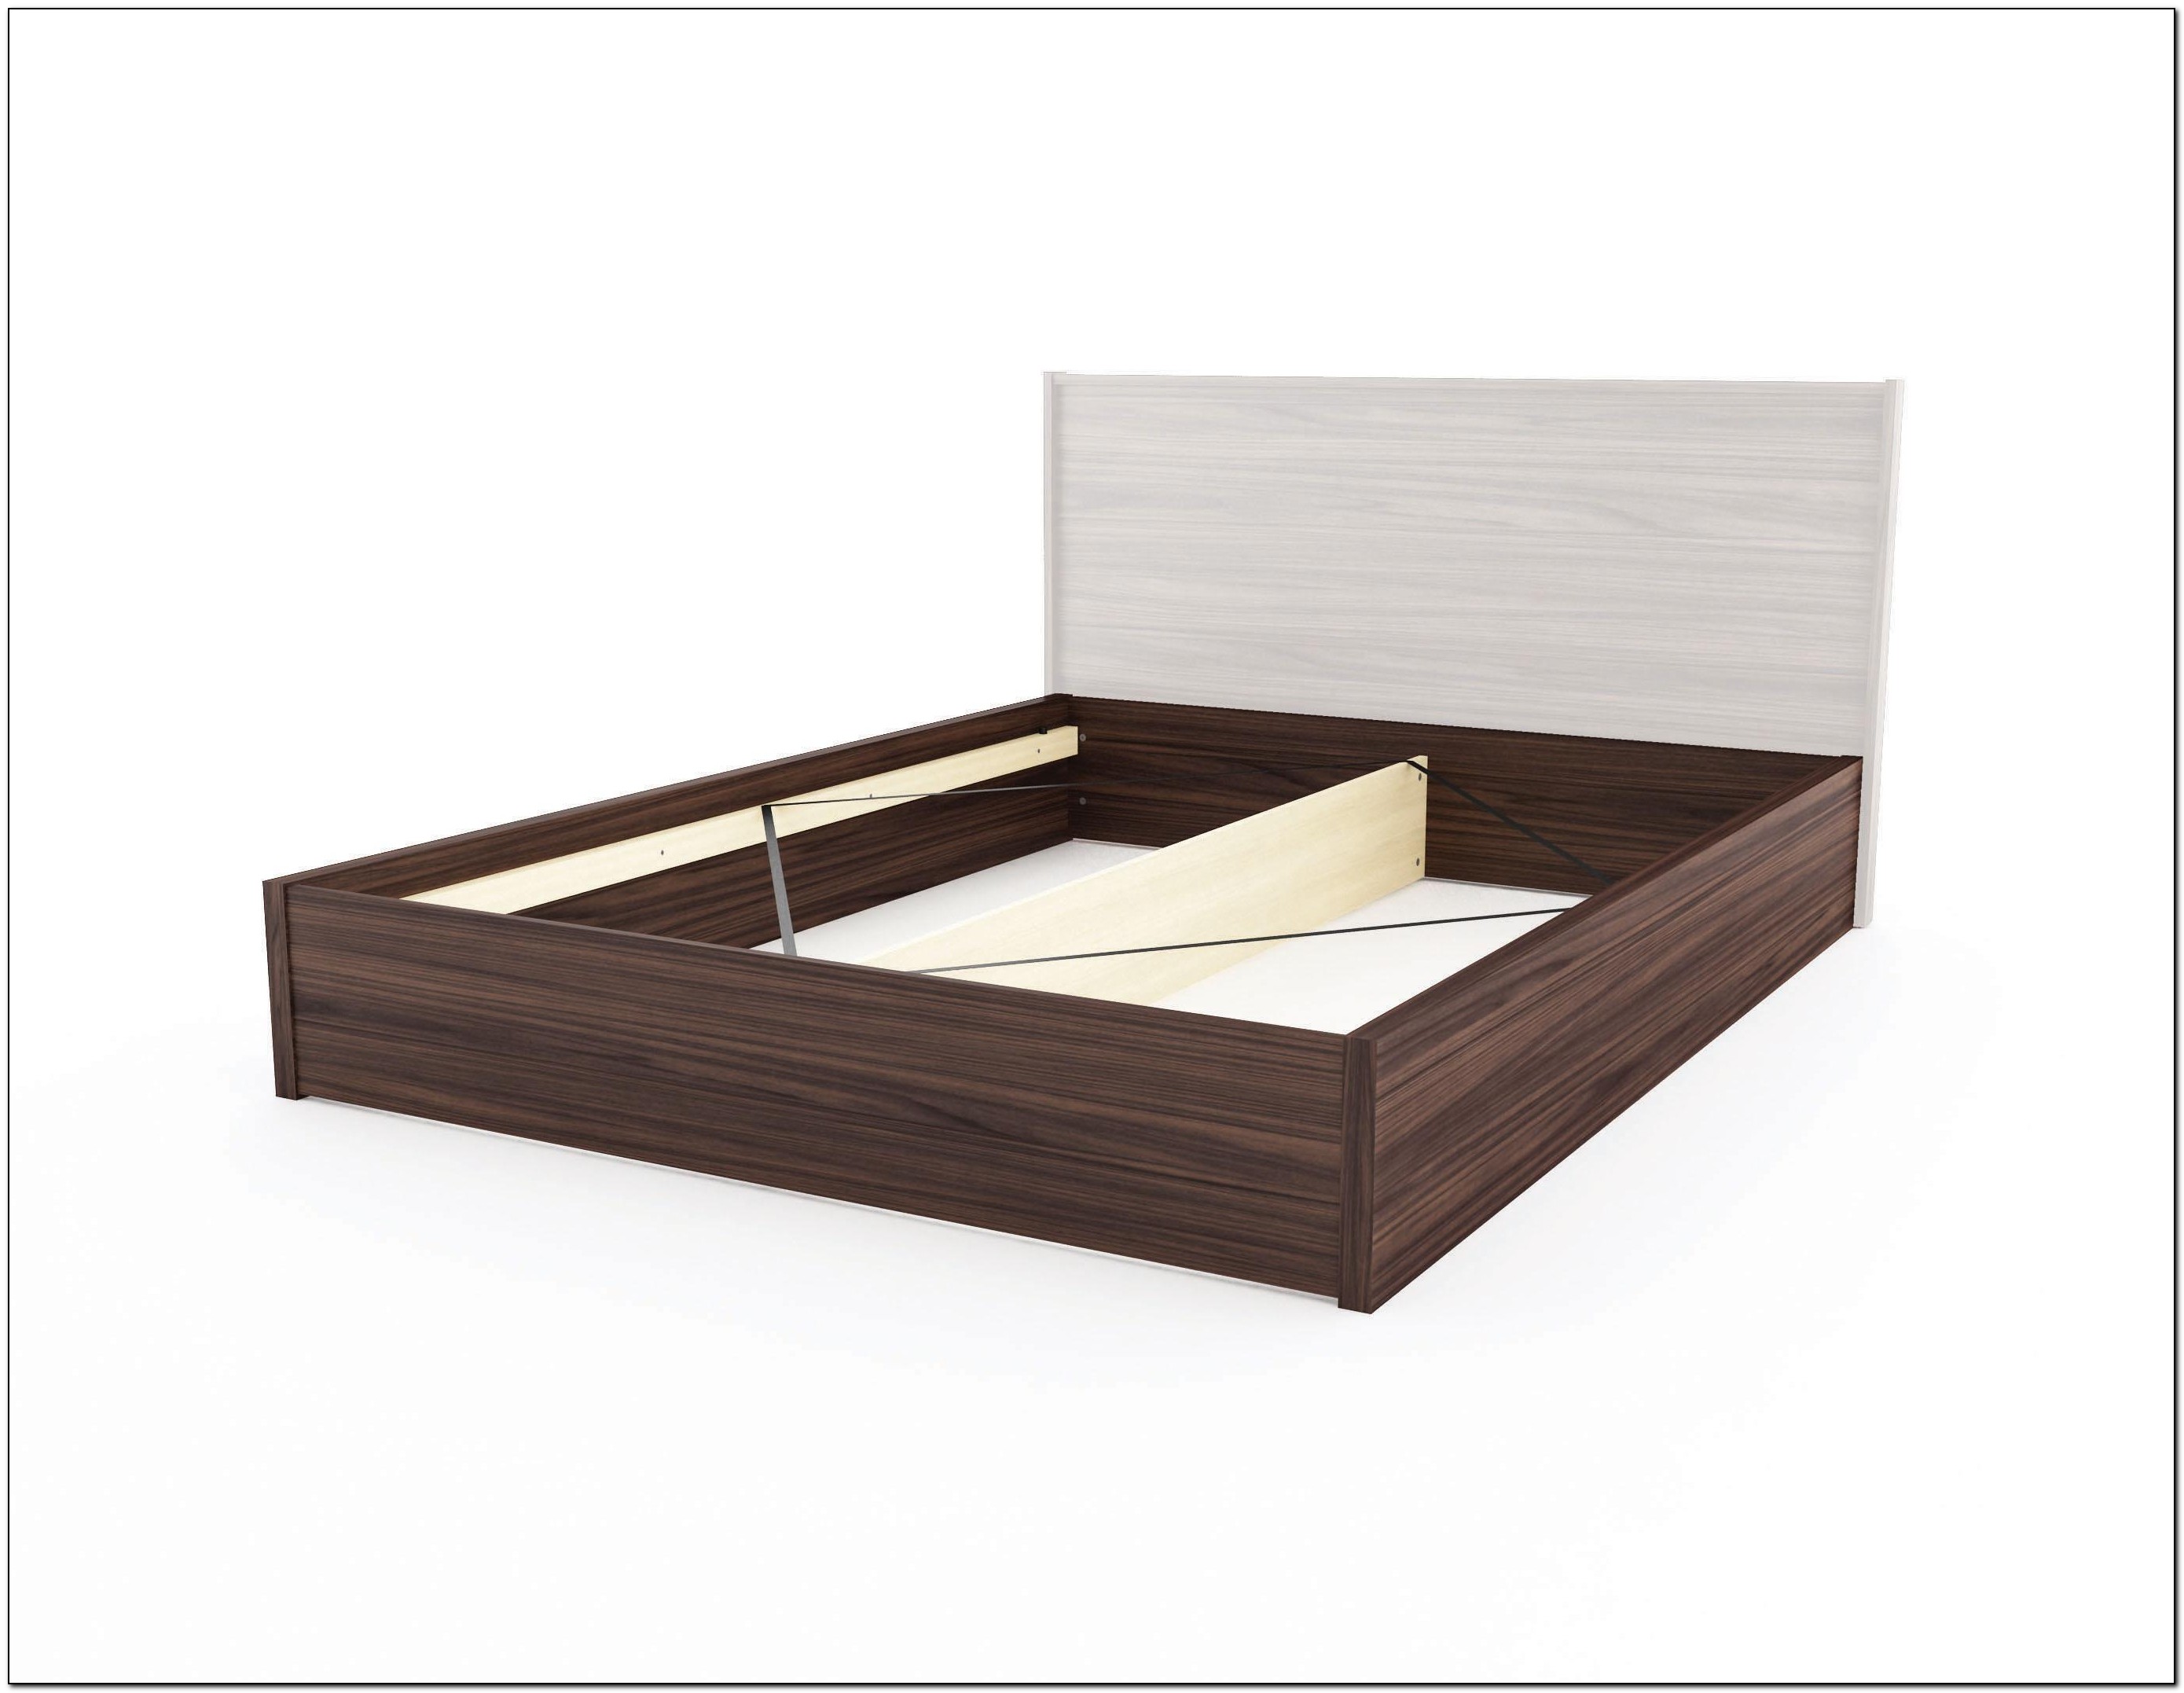 High Bed Frame Queen Size - Beds : Home Design Ideas #a5Pj1O7Q9l10444